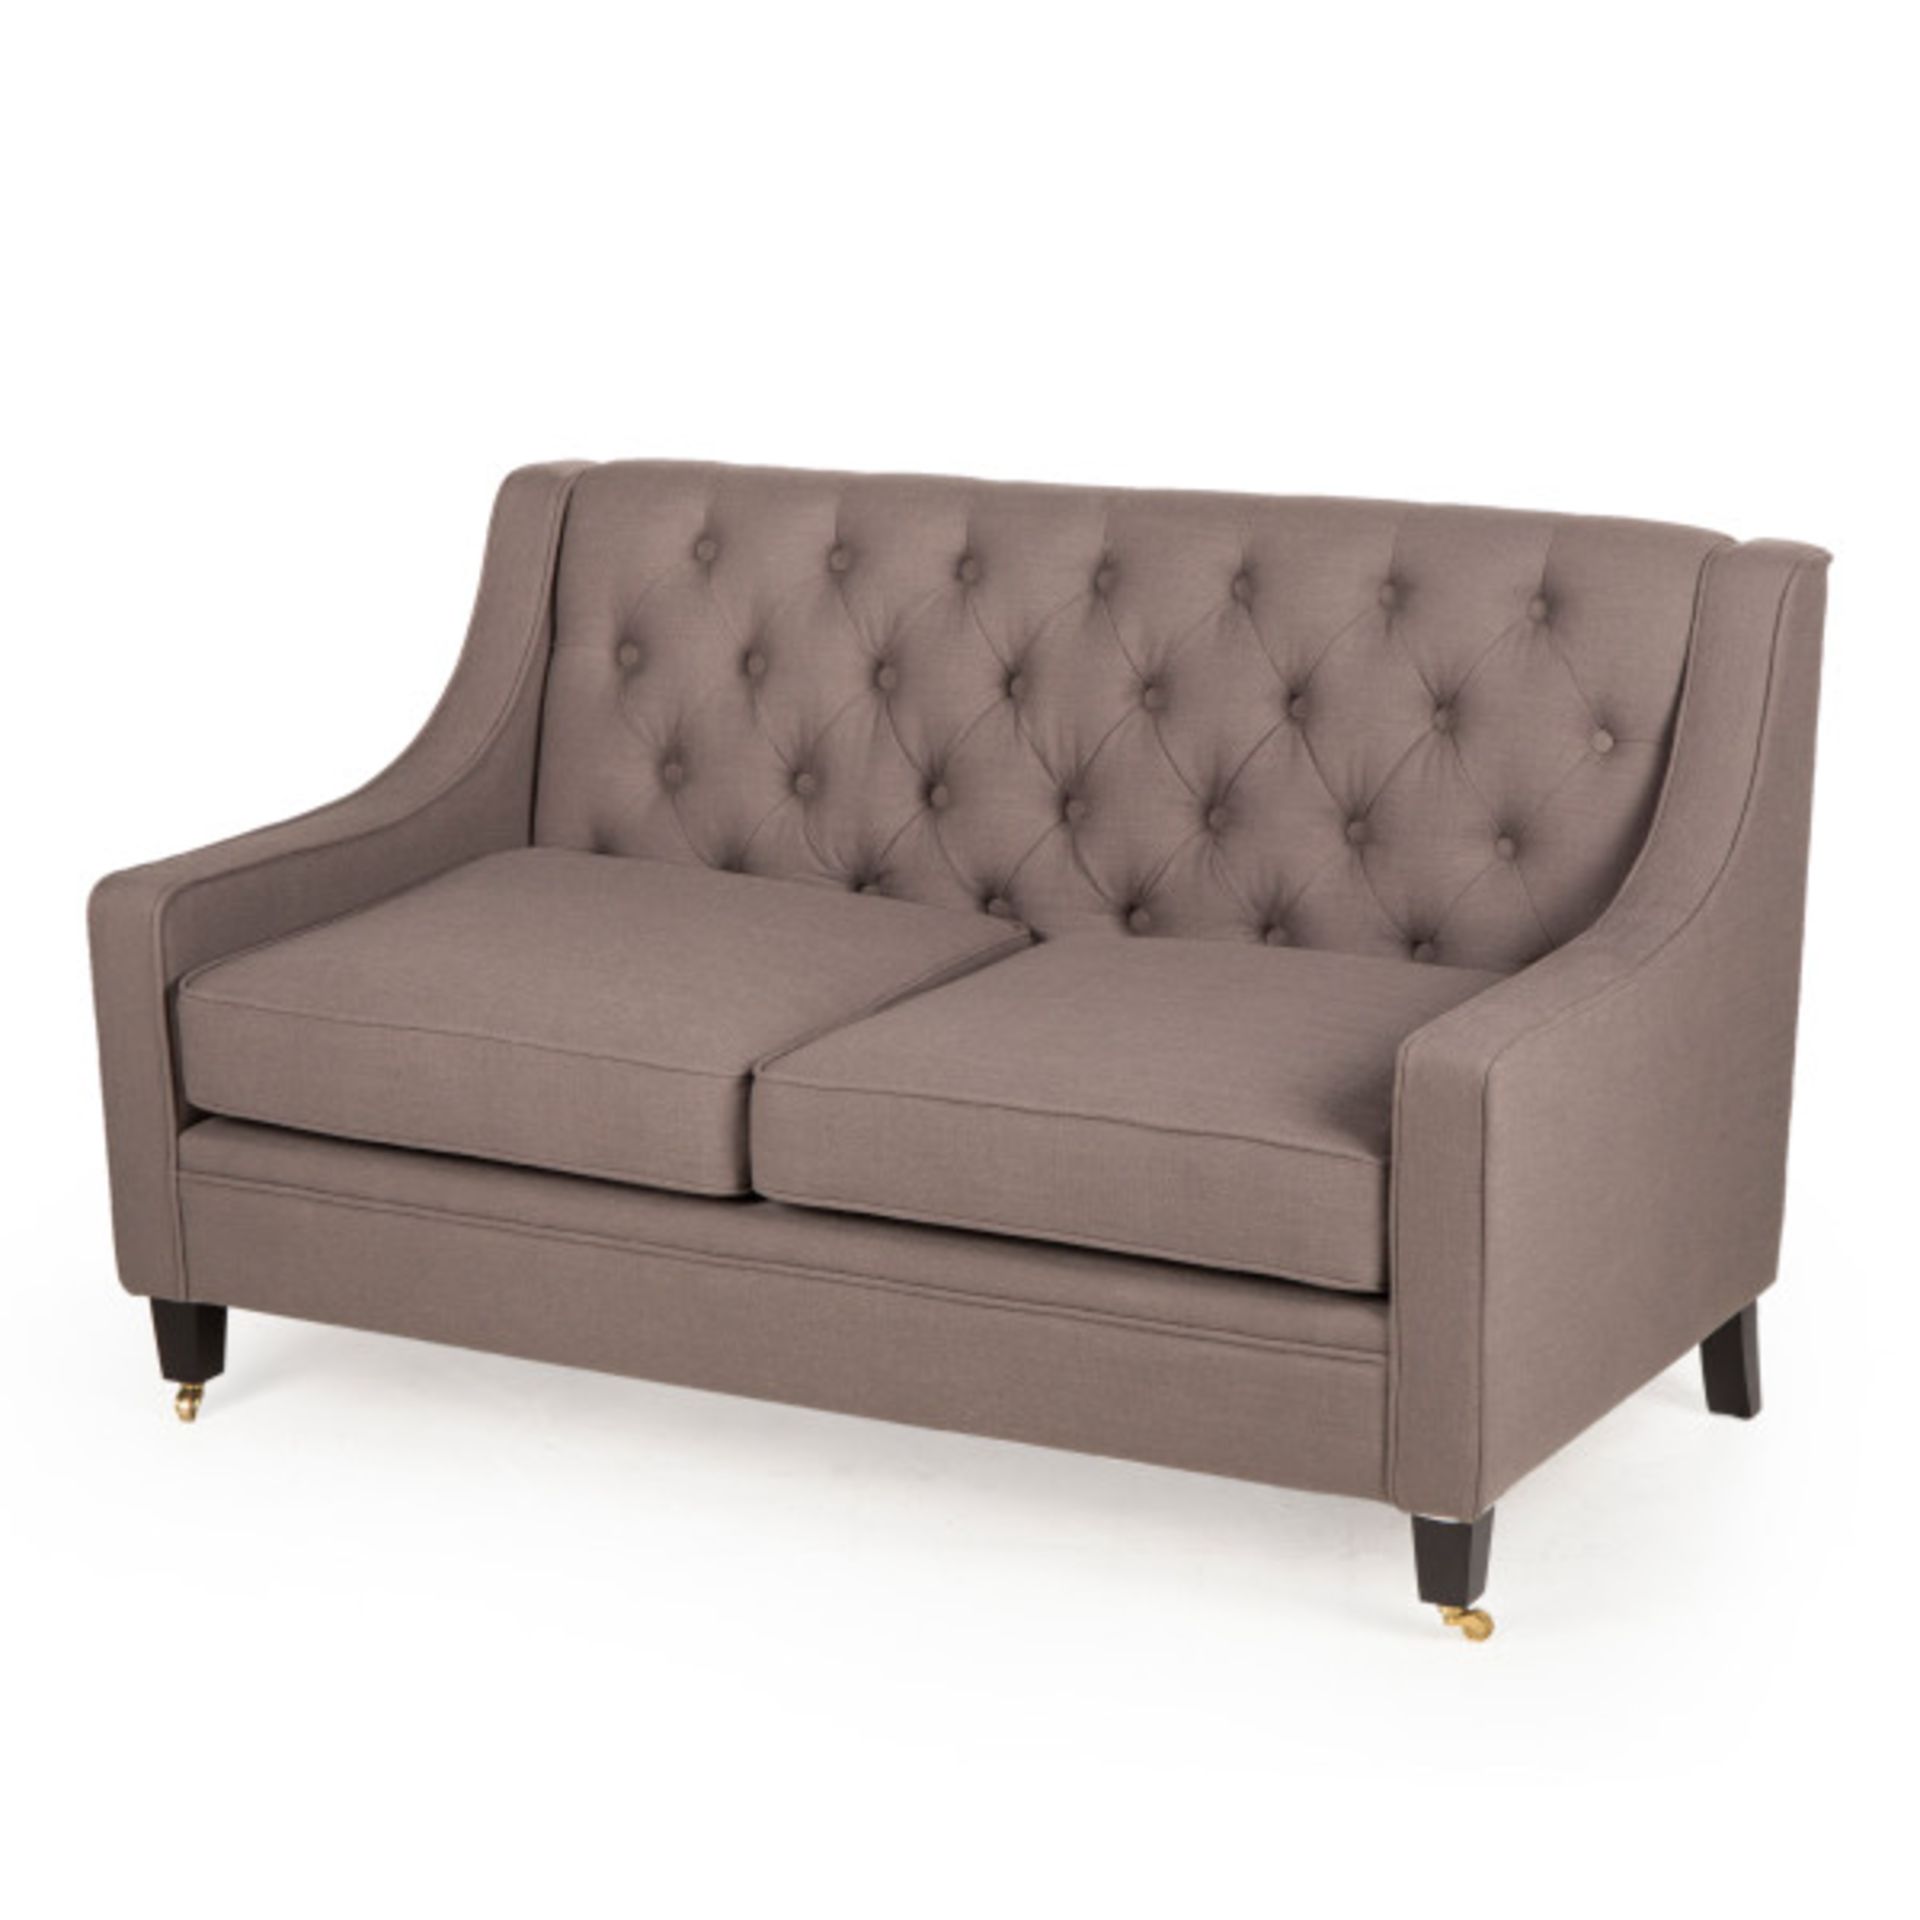 Maison 55 Anna Sofa A Classic Tufted Back Elegant Upholstered Sofa carton dimensions 106 x 173 x